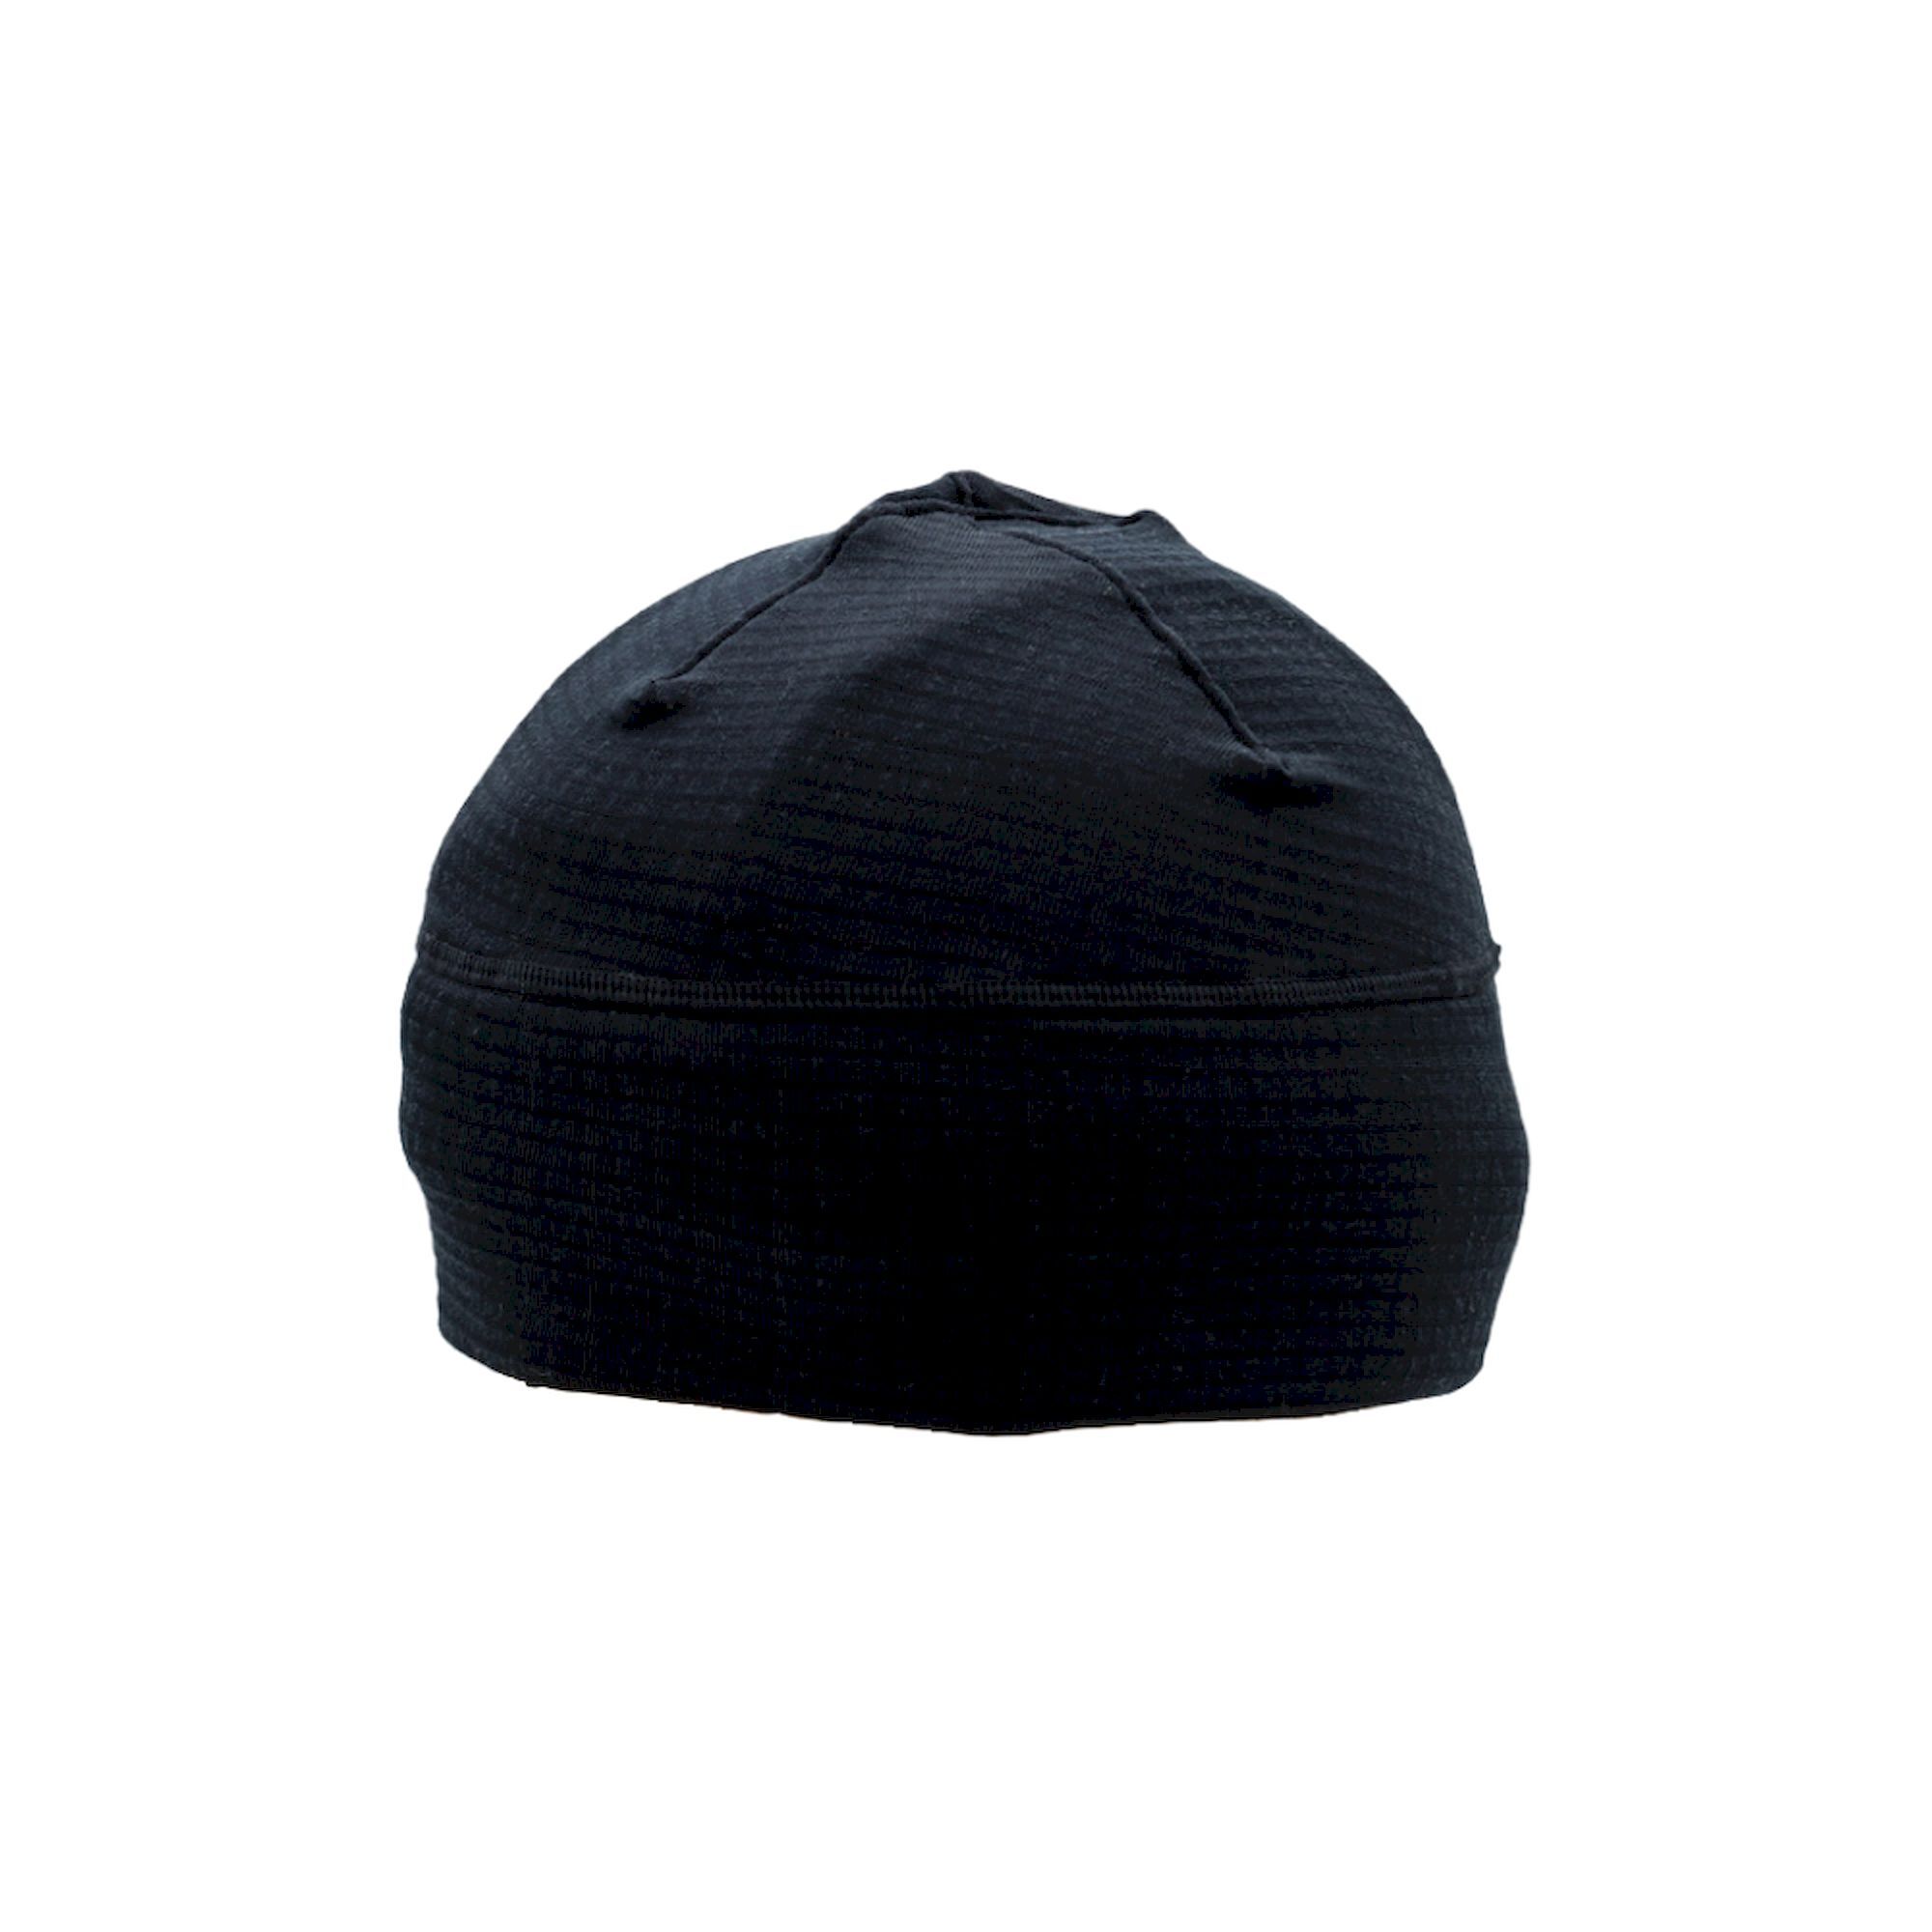 PAG Neckwear Technical Hat - Bonnet